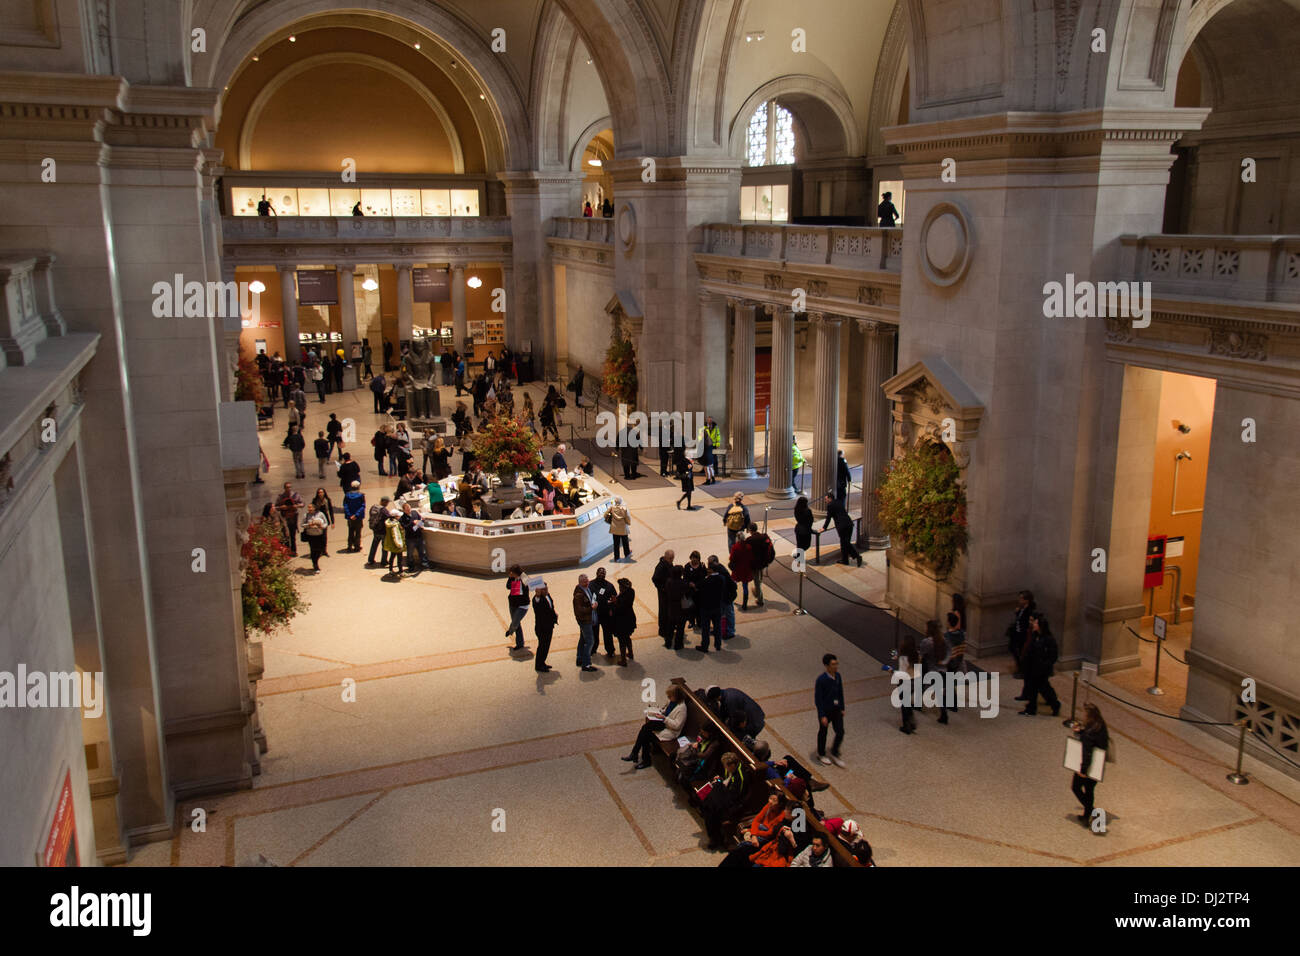 The Metropolitan Museum of Art. New York City, United States of America. Stock Photo